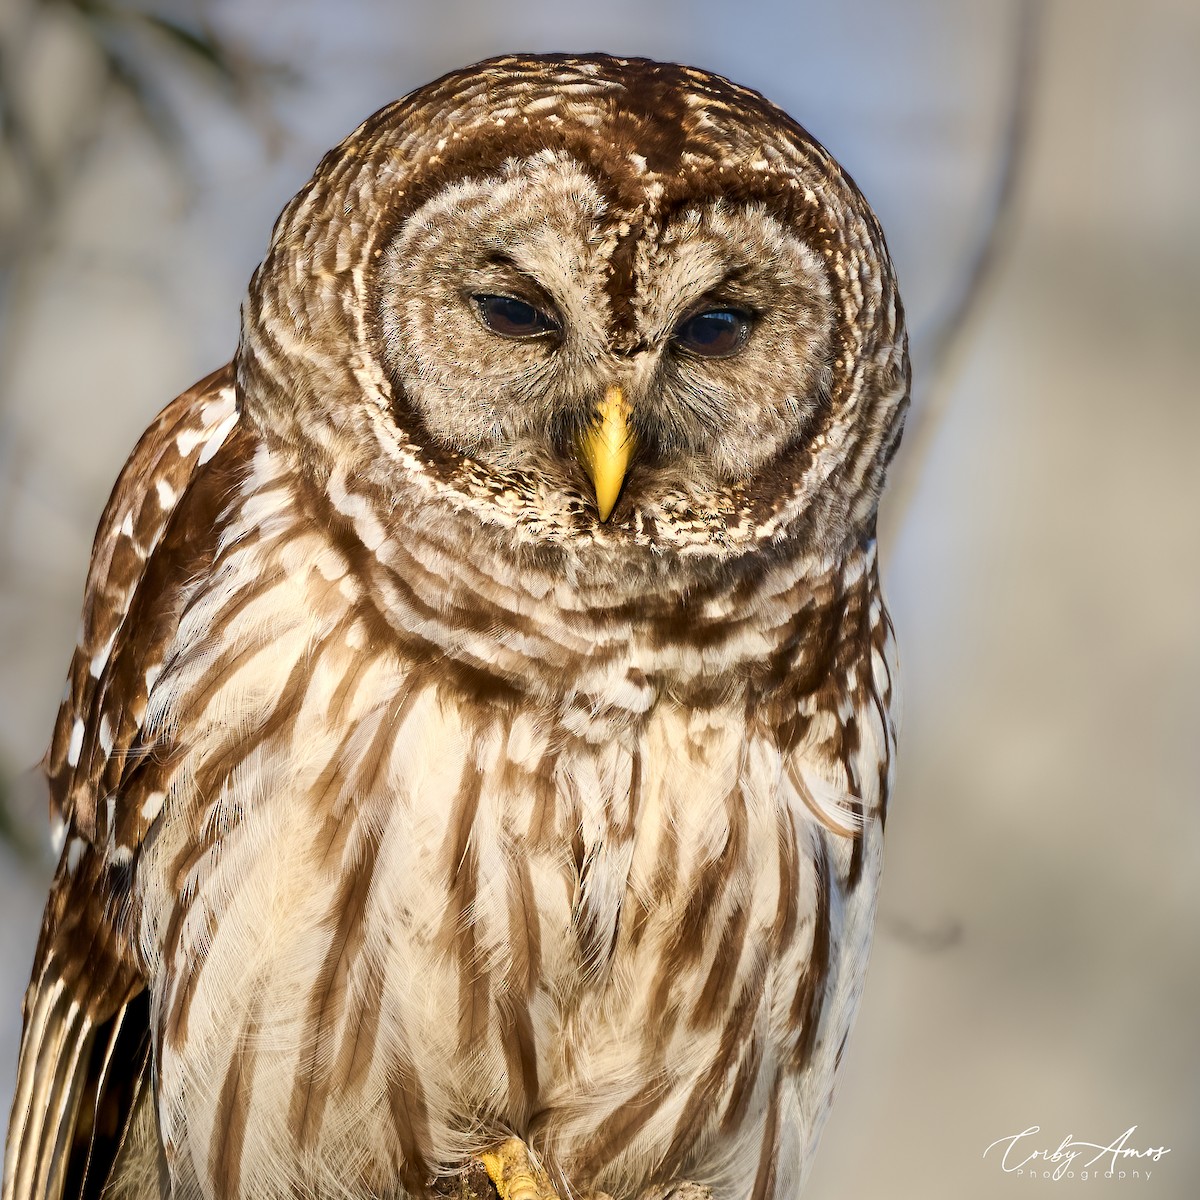 Barred Owl - Corby Amos